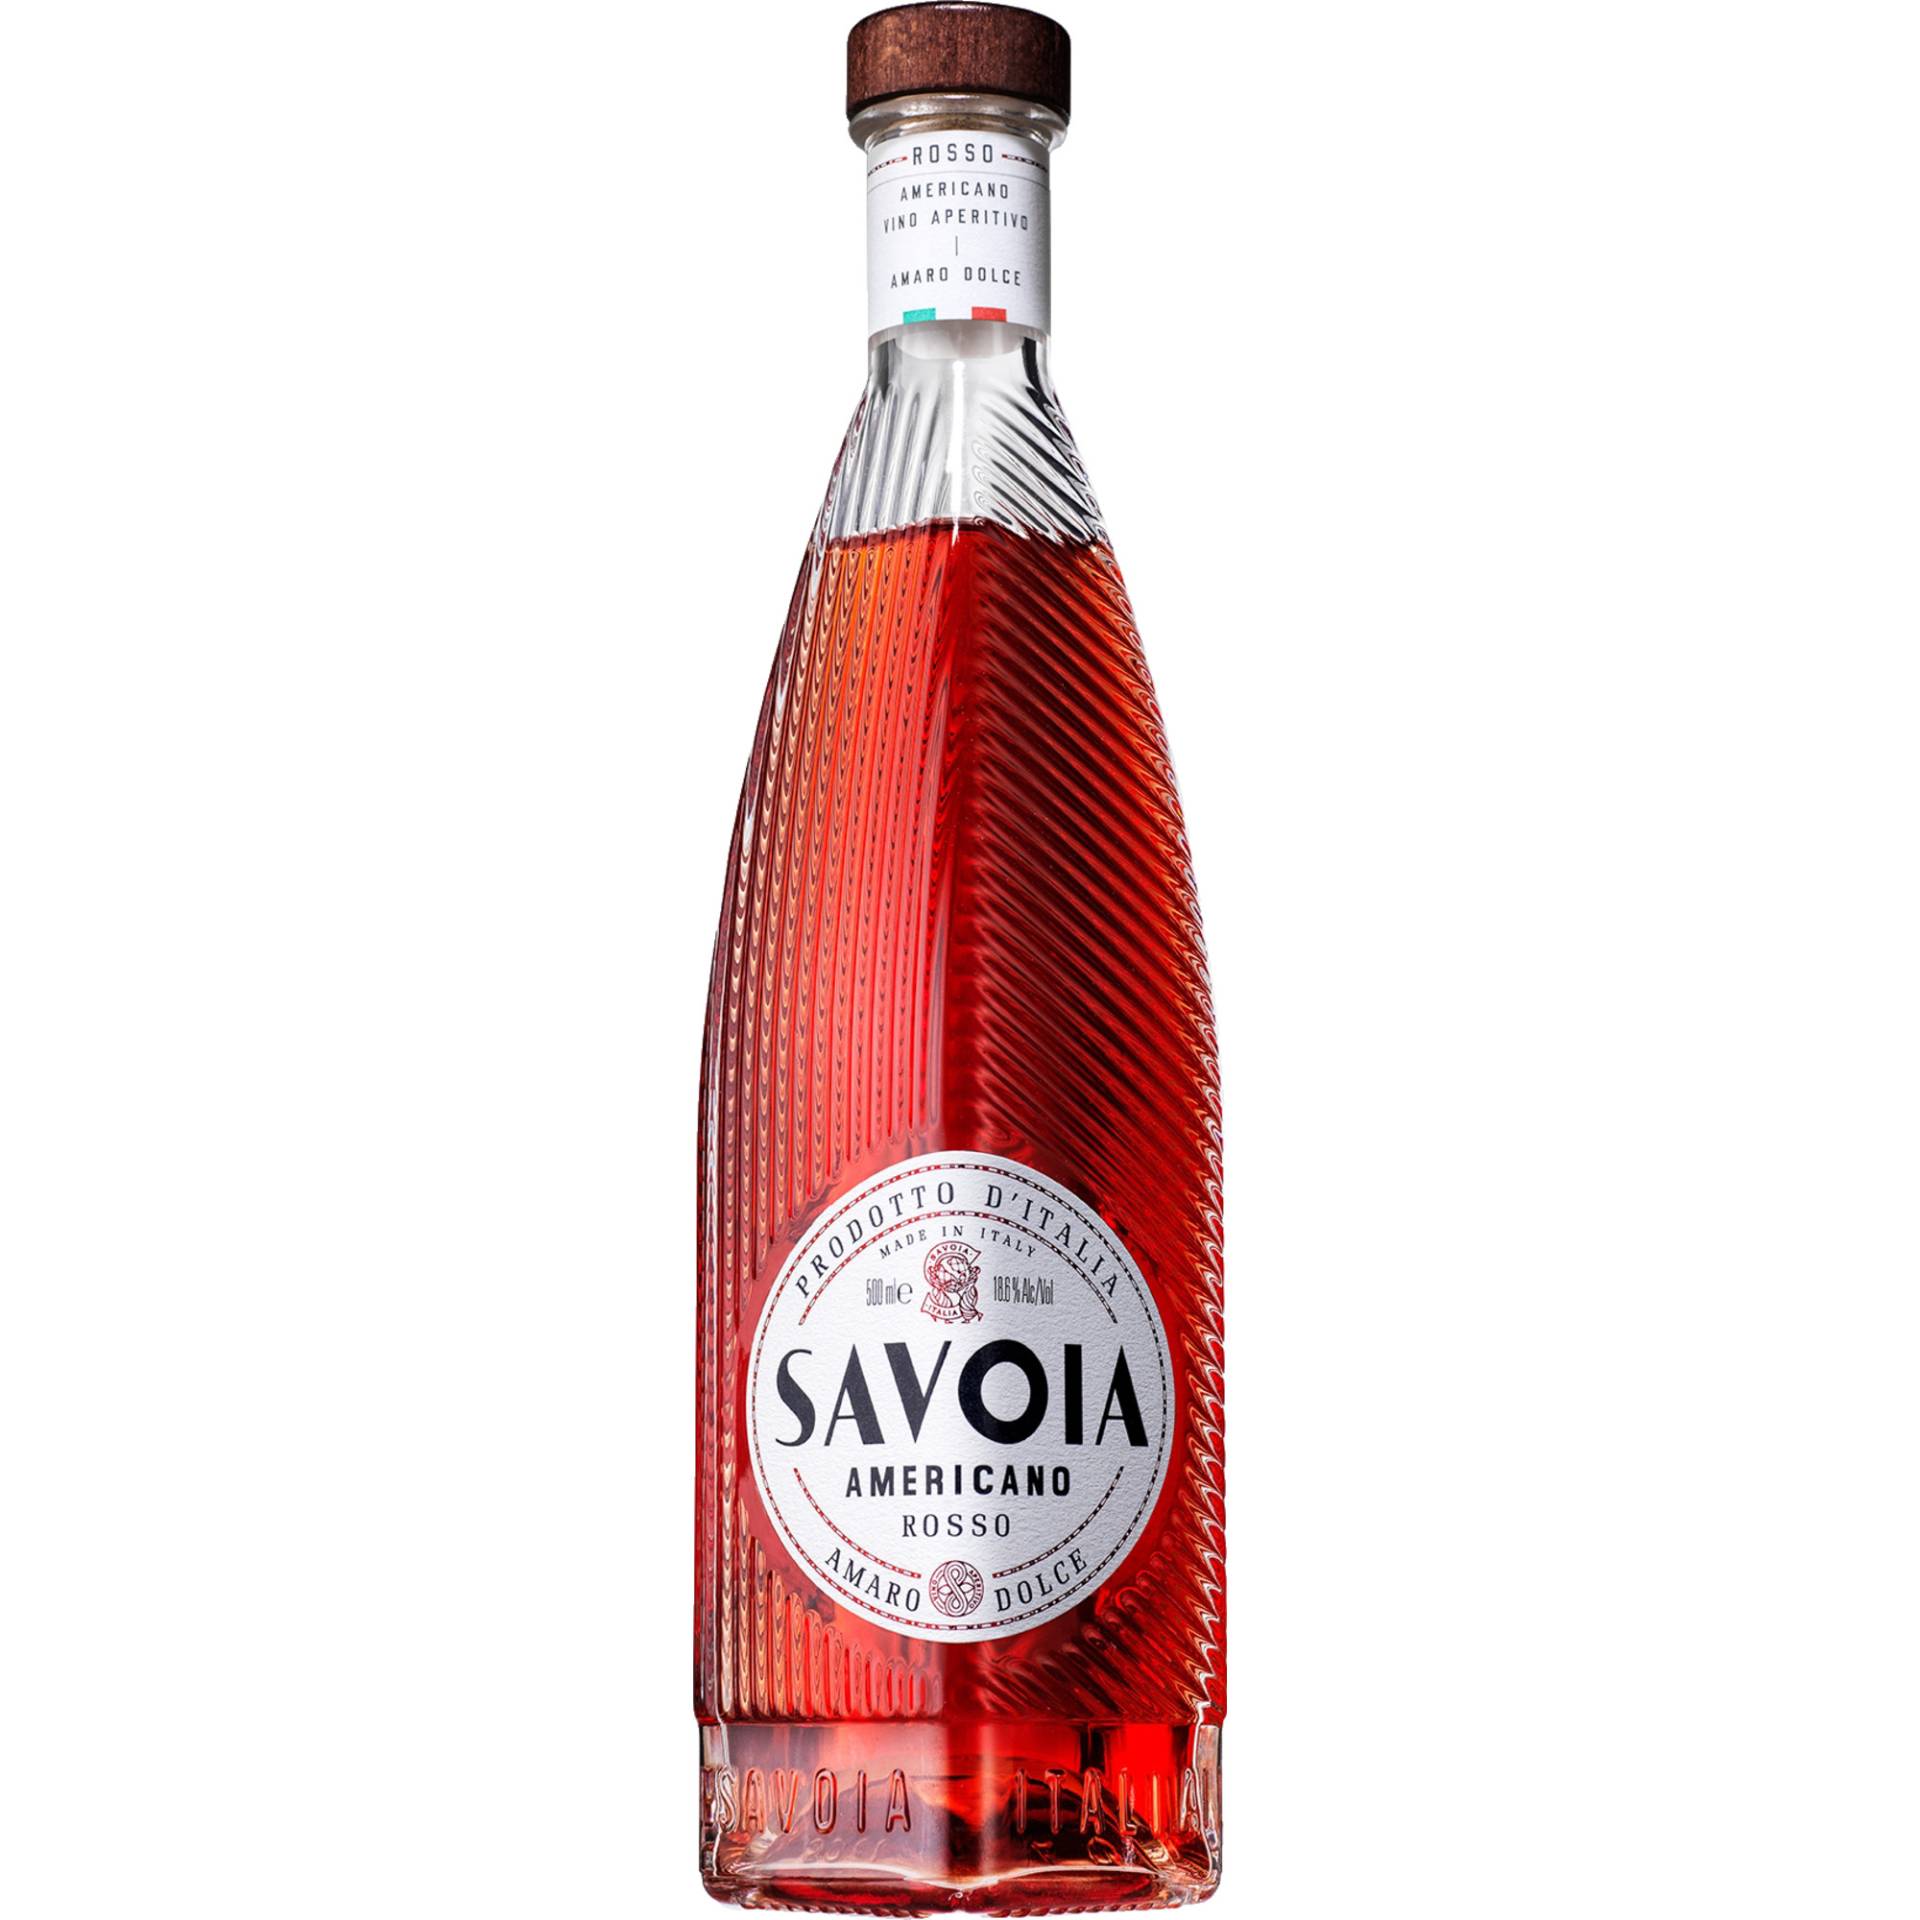 Savoia Americano Rosso, Italien, 0,5 L, 18,6% Vol., Spirituosen von Casa Savoia Ltd, Italien